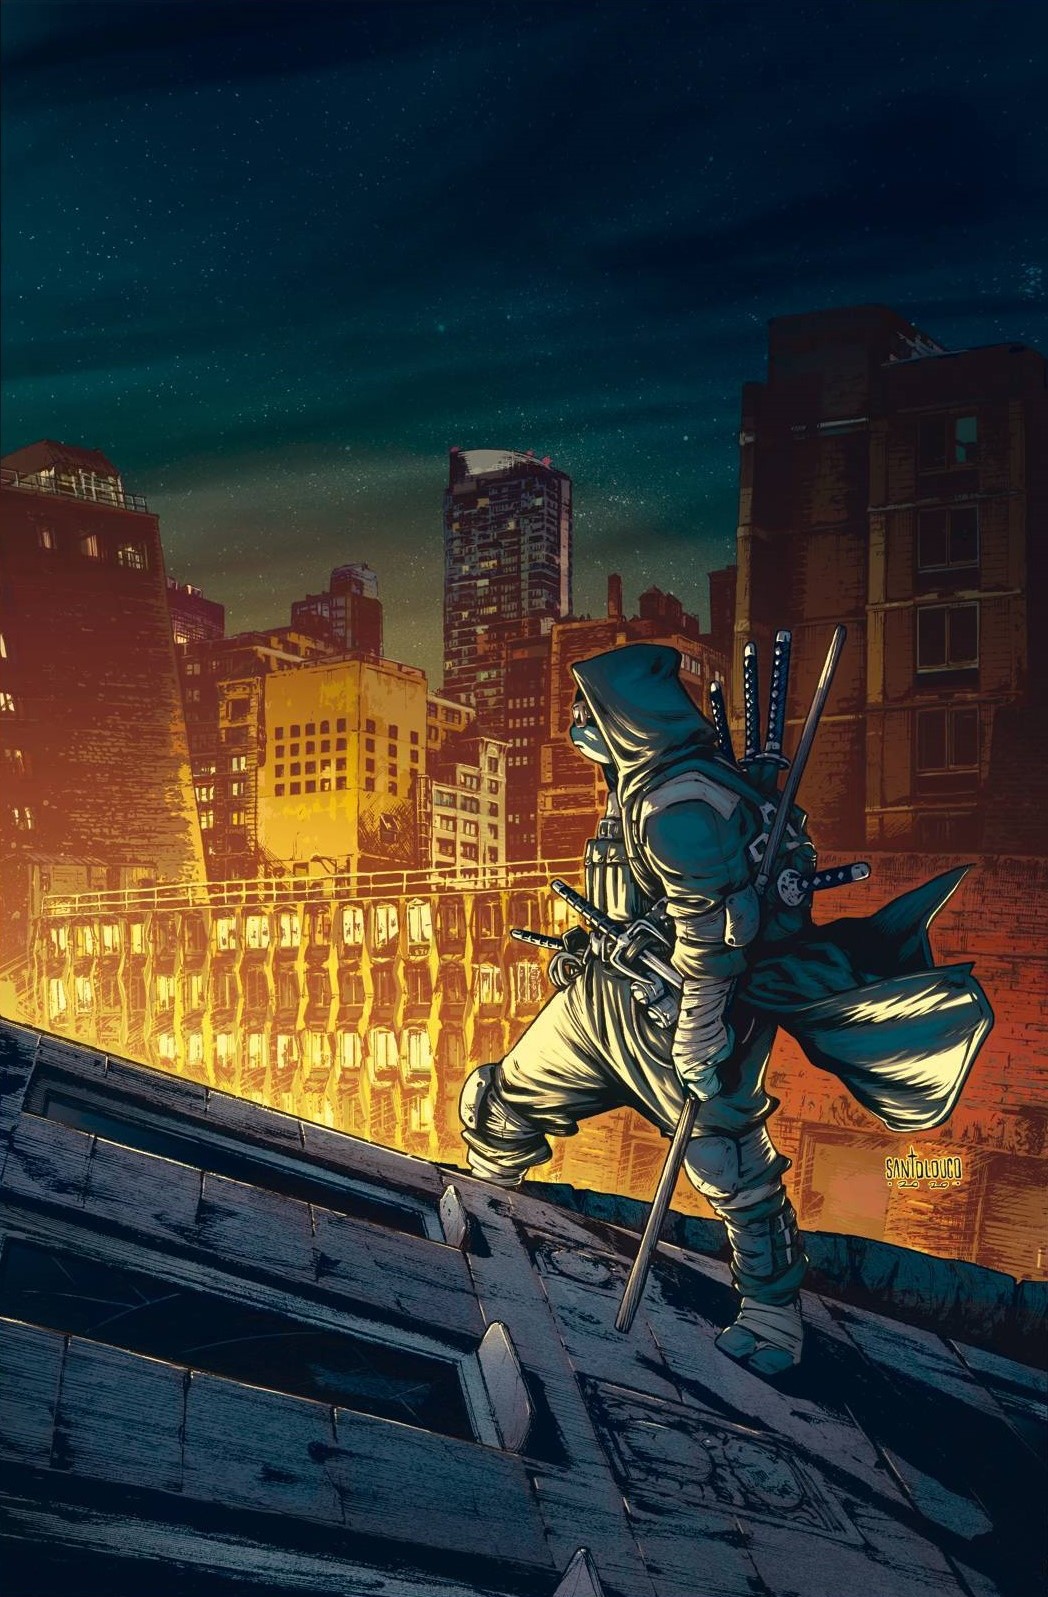 General 1048x1597 Teenage Mutant Ninja Turtles Santolouco rooftops city night warrior artwork comics